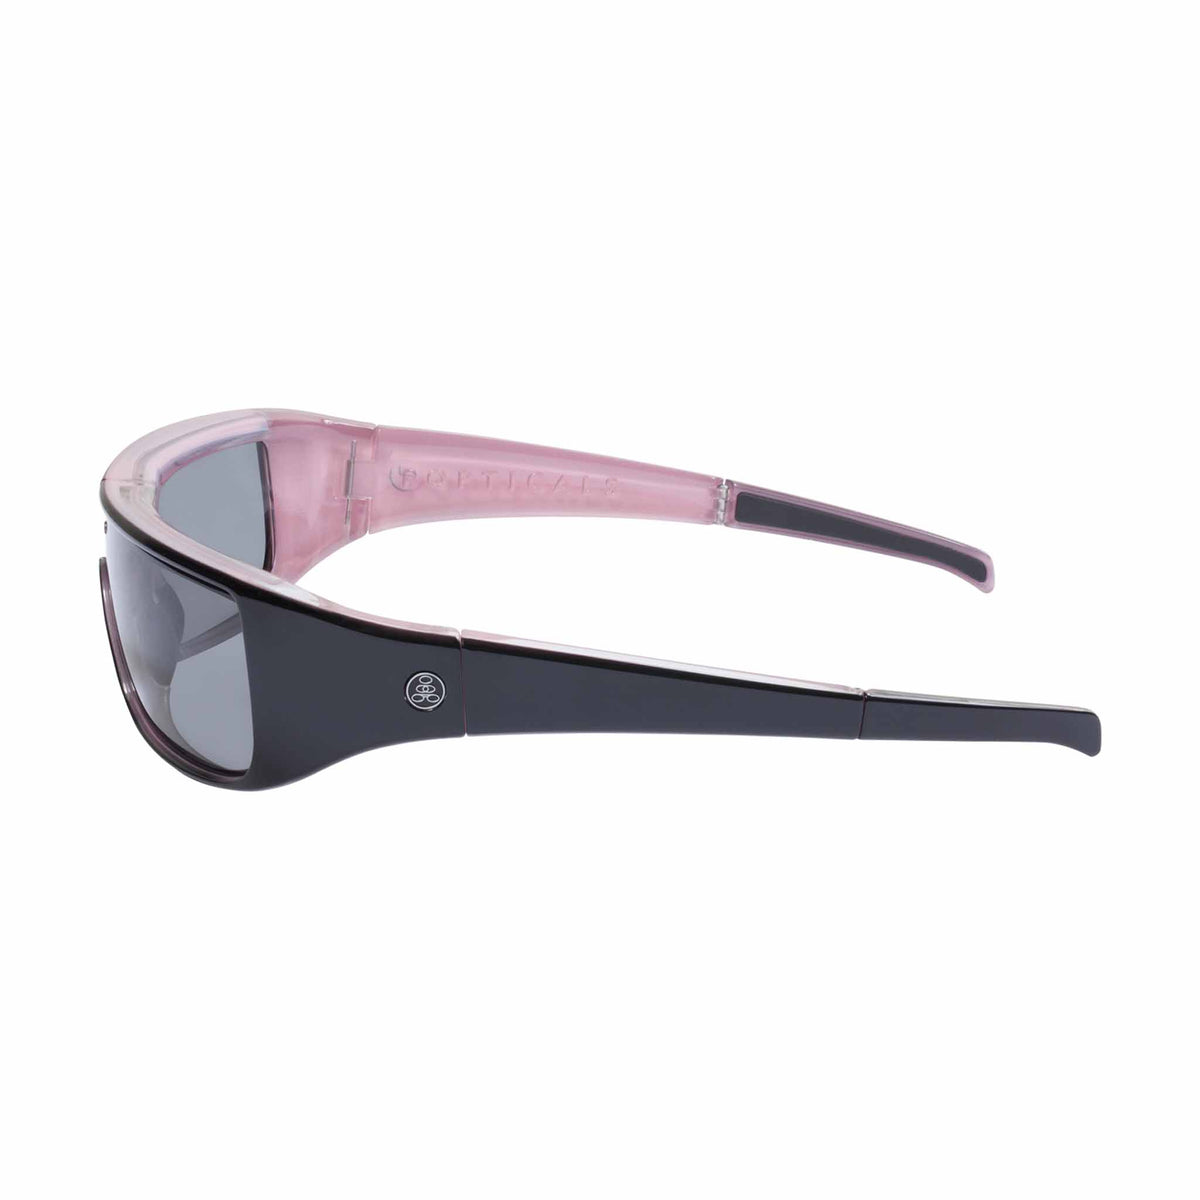 Popticals, Premium Compact Sunglasses, PopGear, 040051-KLGP, Polarized Sunglasses, Gloss Black over Pink Crystal Frame , Gray Lenses, Side View